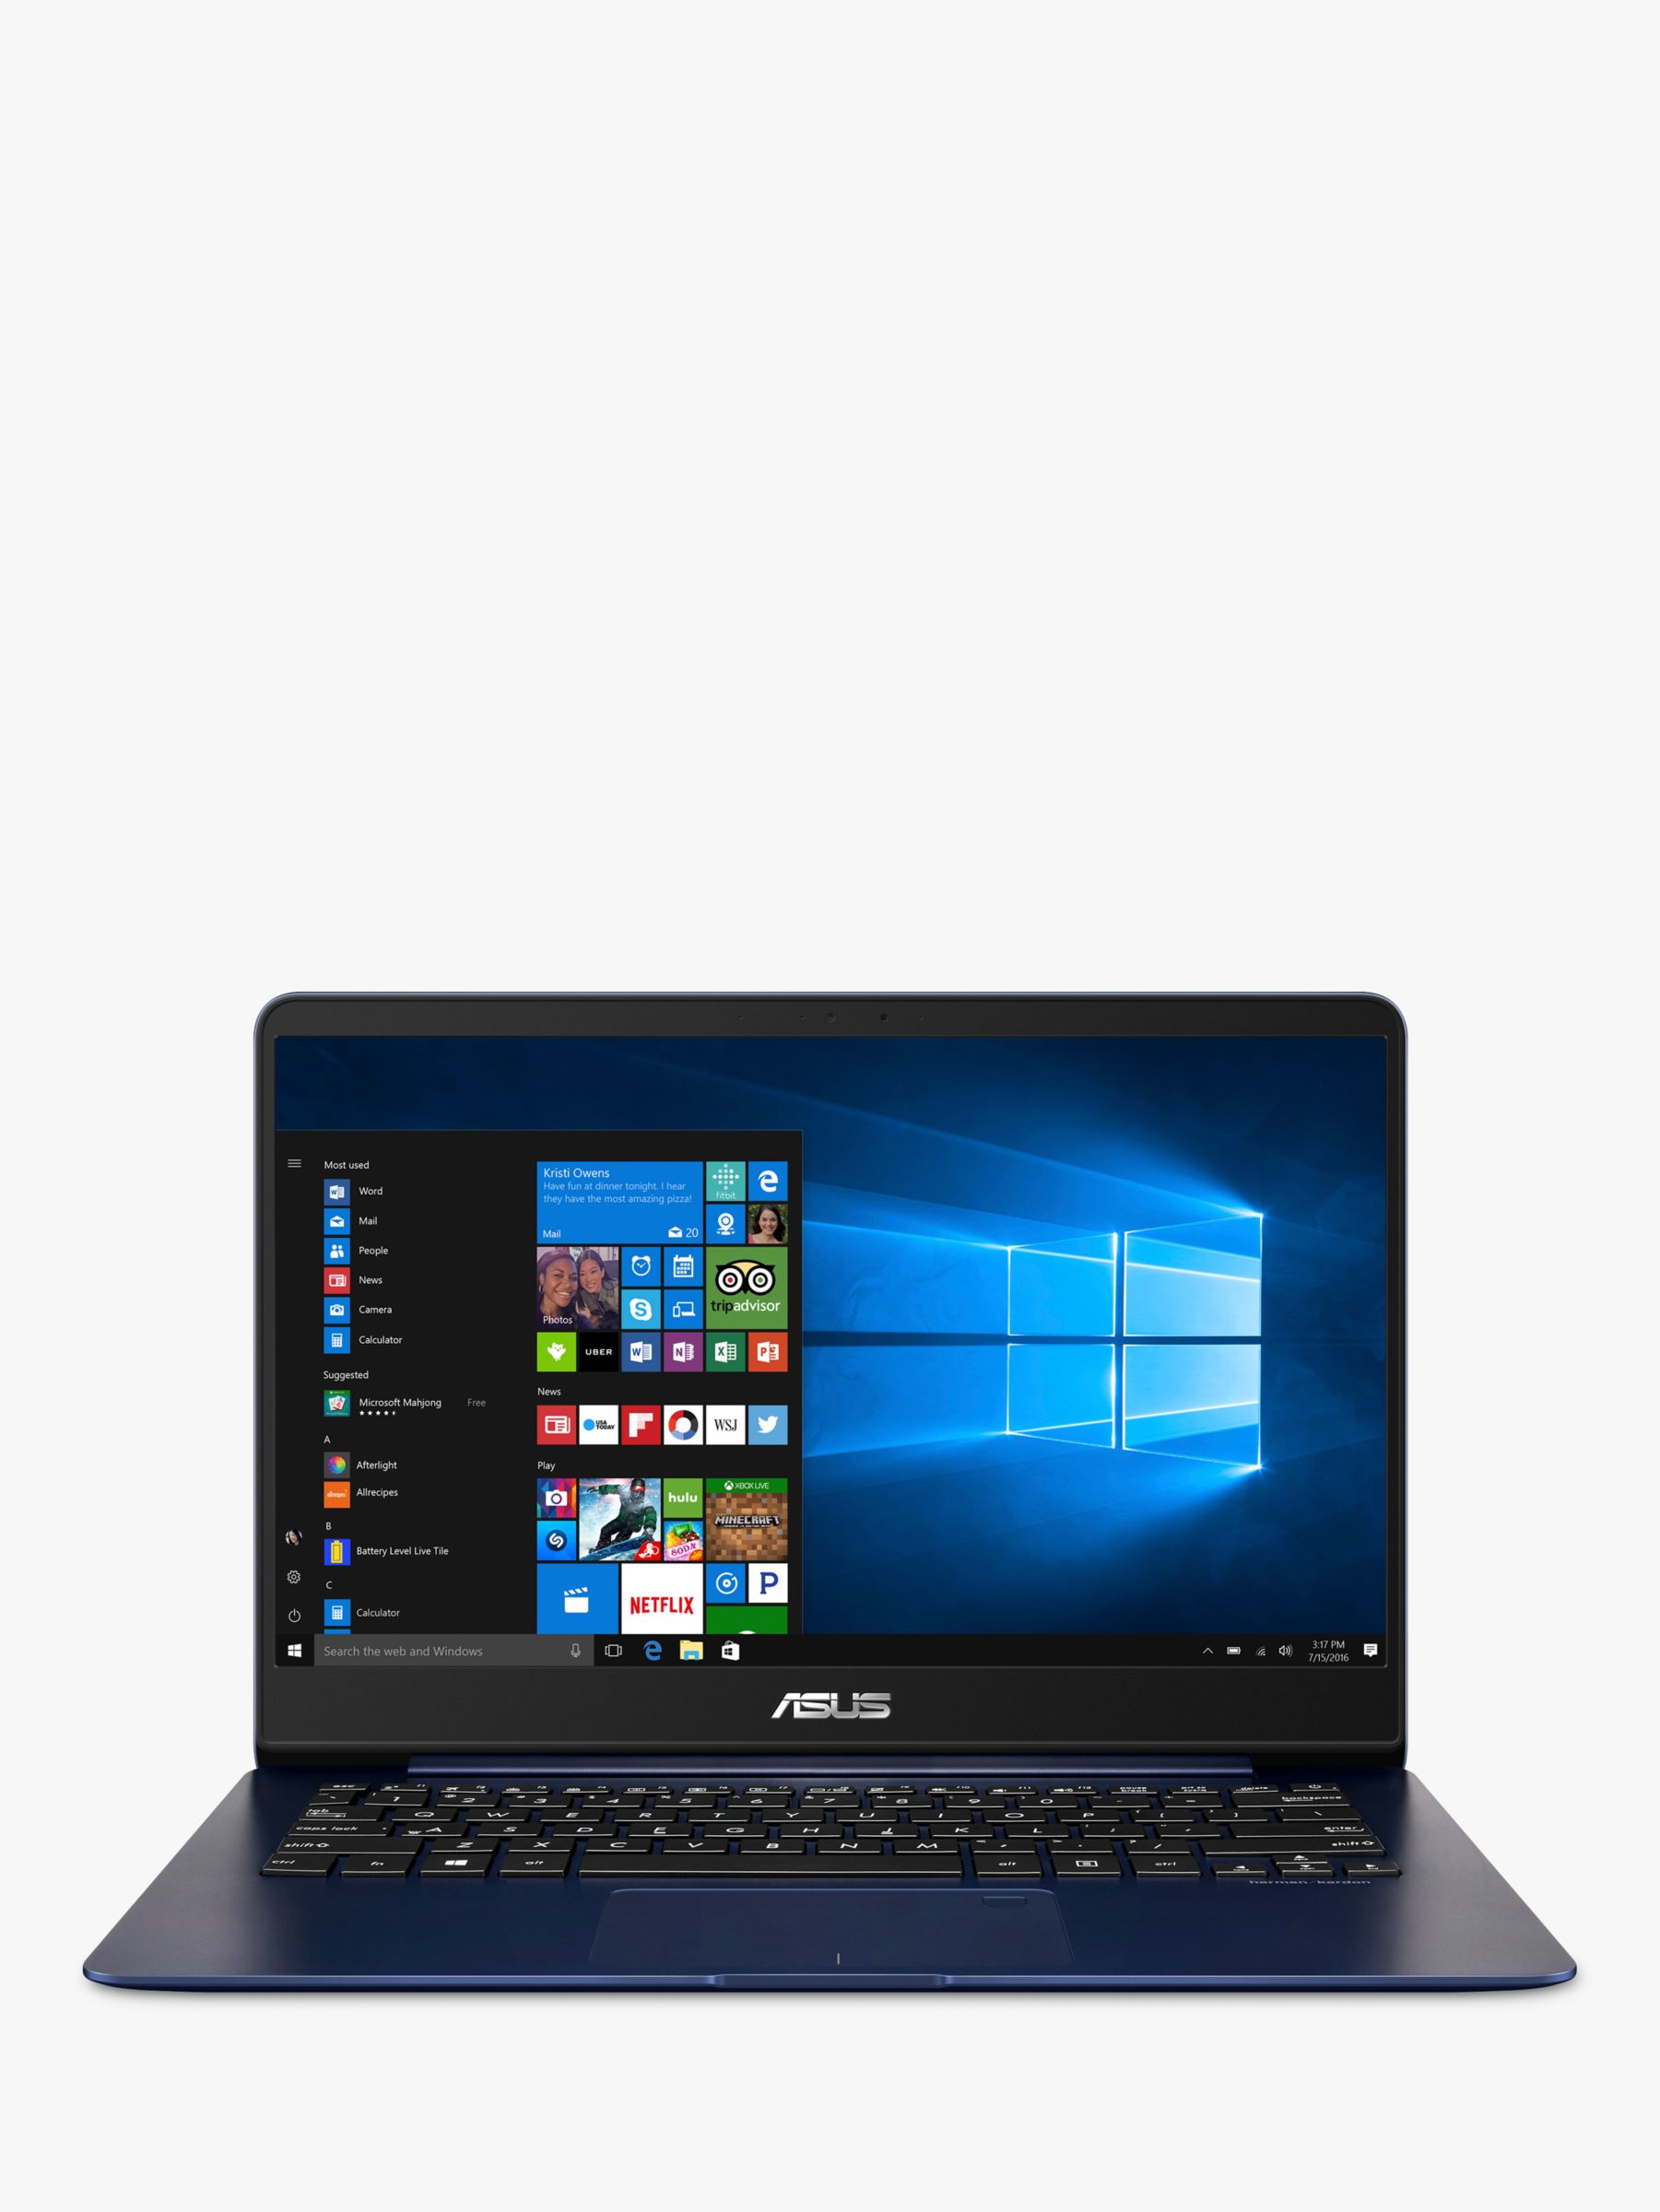 ASUS Zenbook UX430UA-GV415T Laptop, Intel Core i7, 8GB, 256GB SSD, 14", Blue